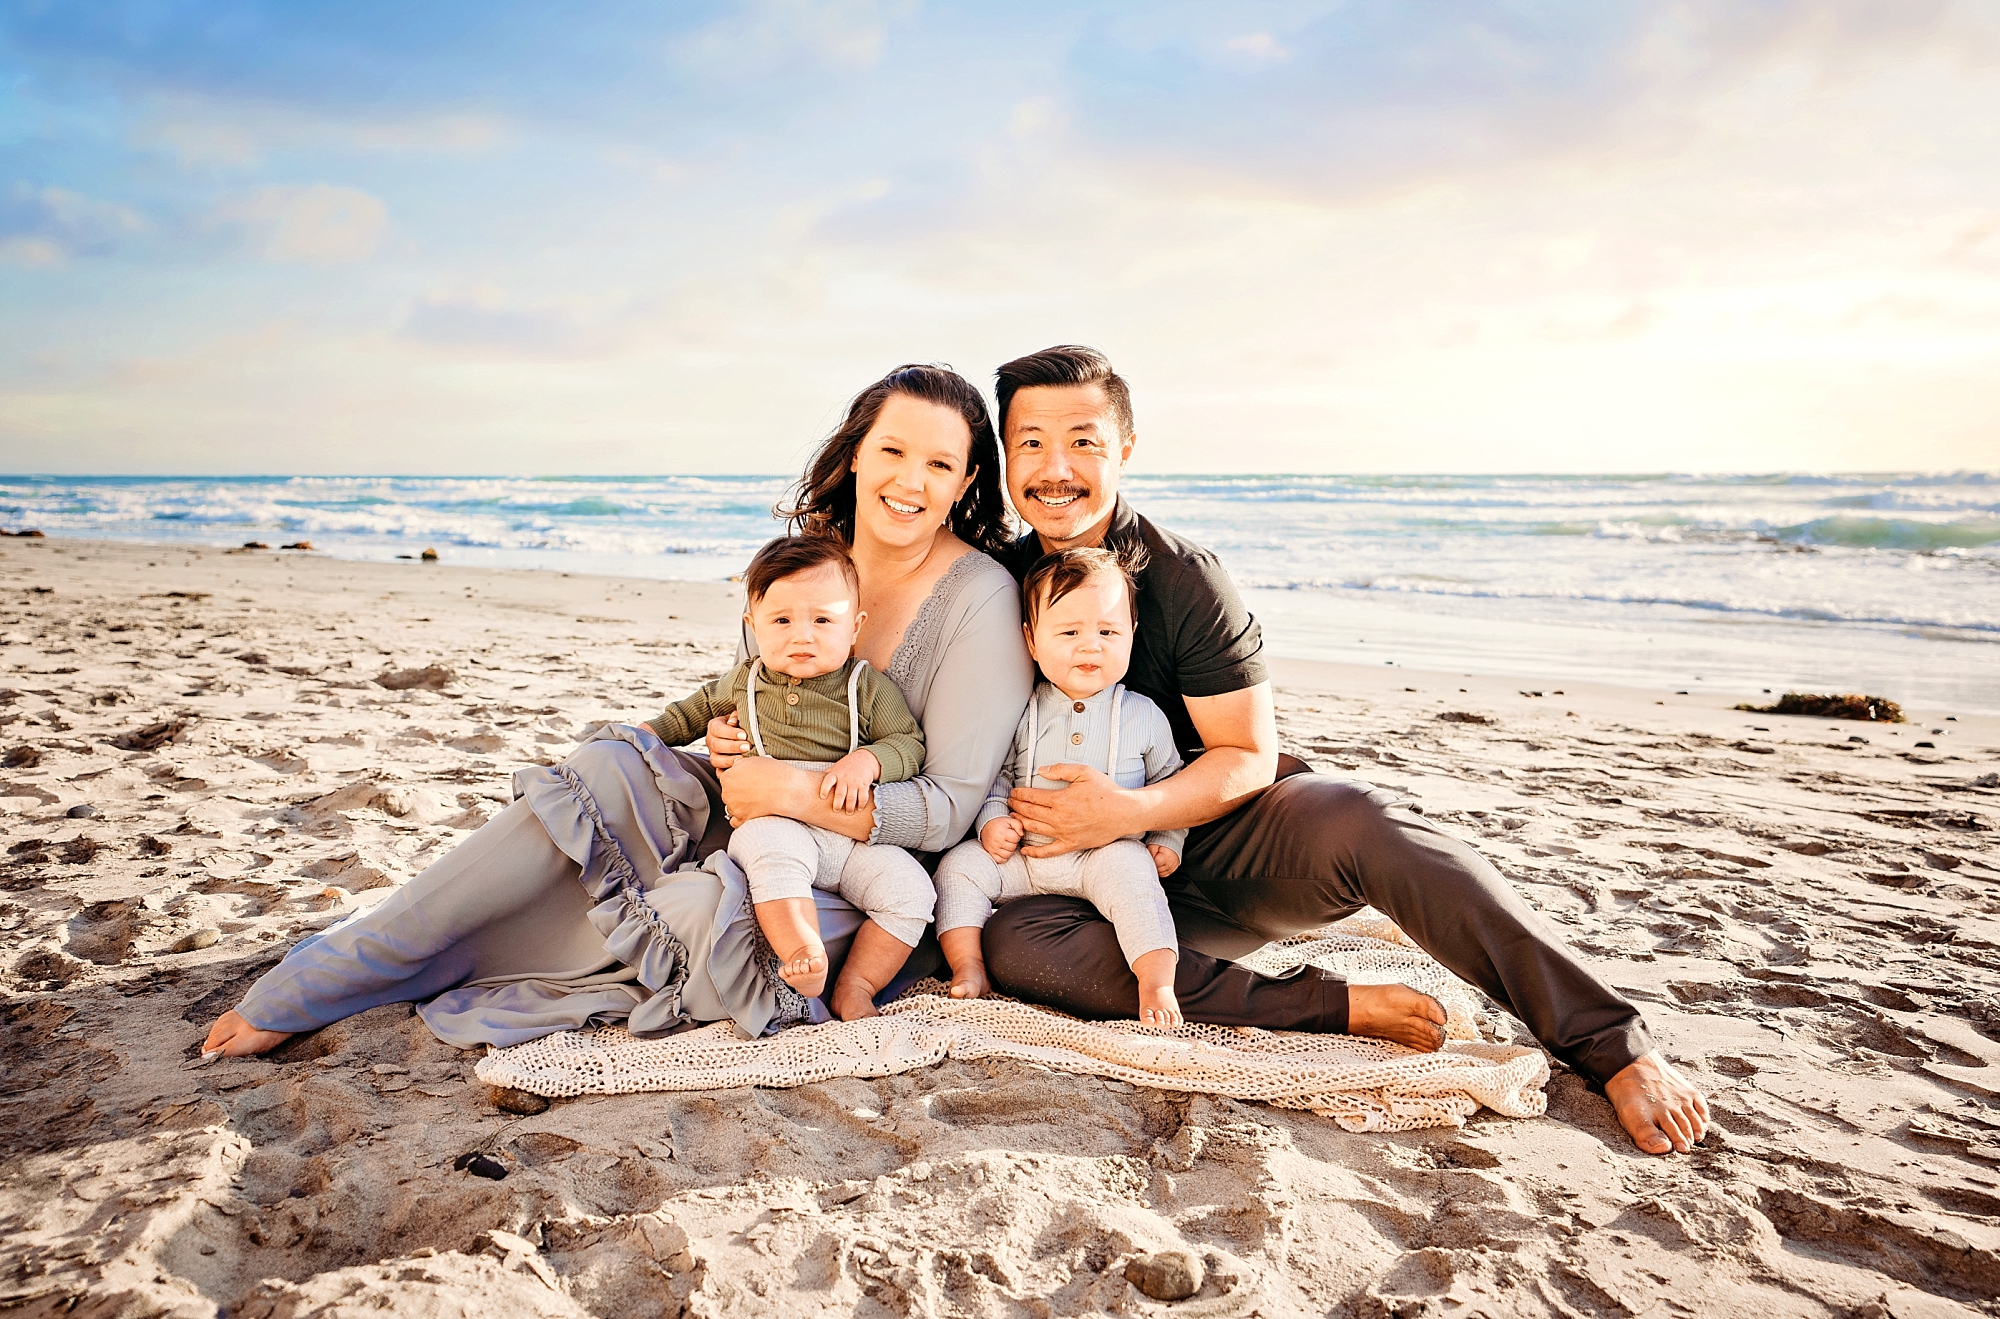 Solana Beach family photos 